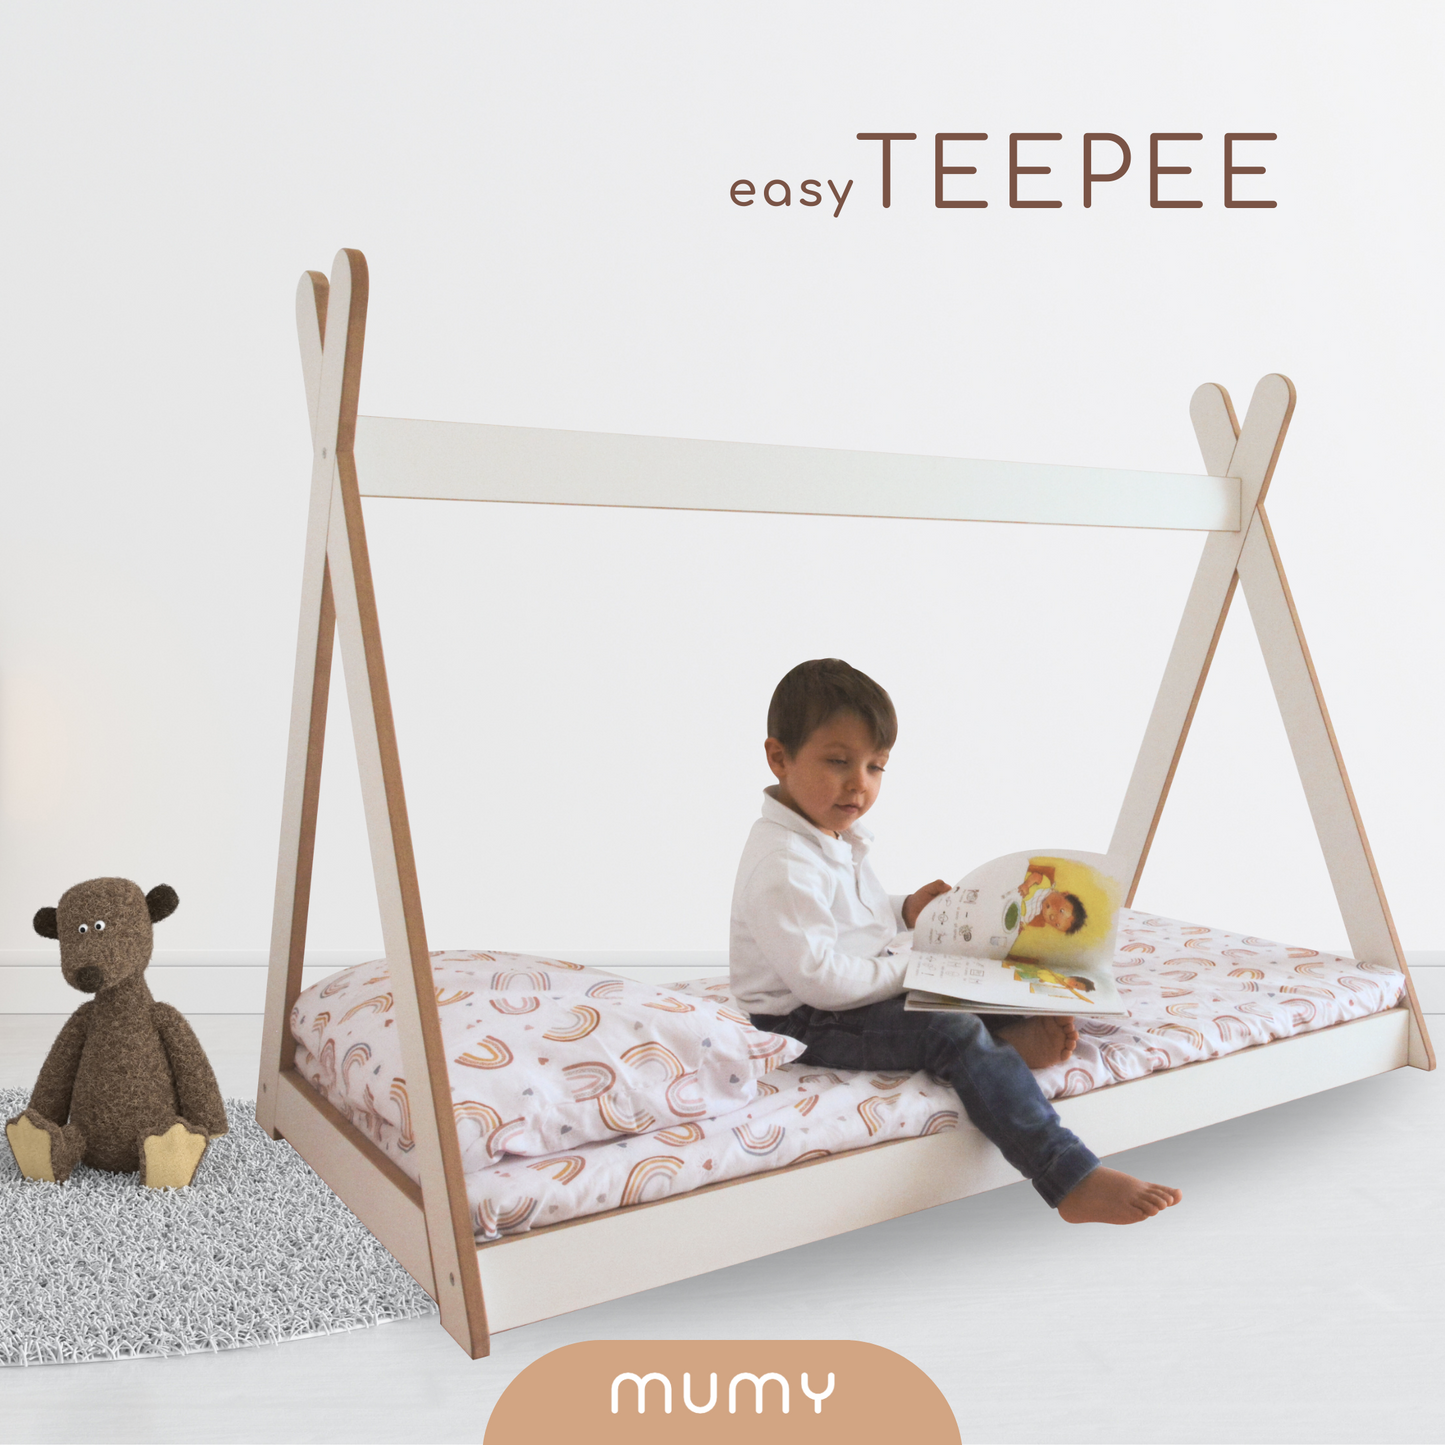 easyTEEPEE • Montessori hut-shaped bed